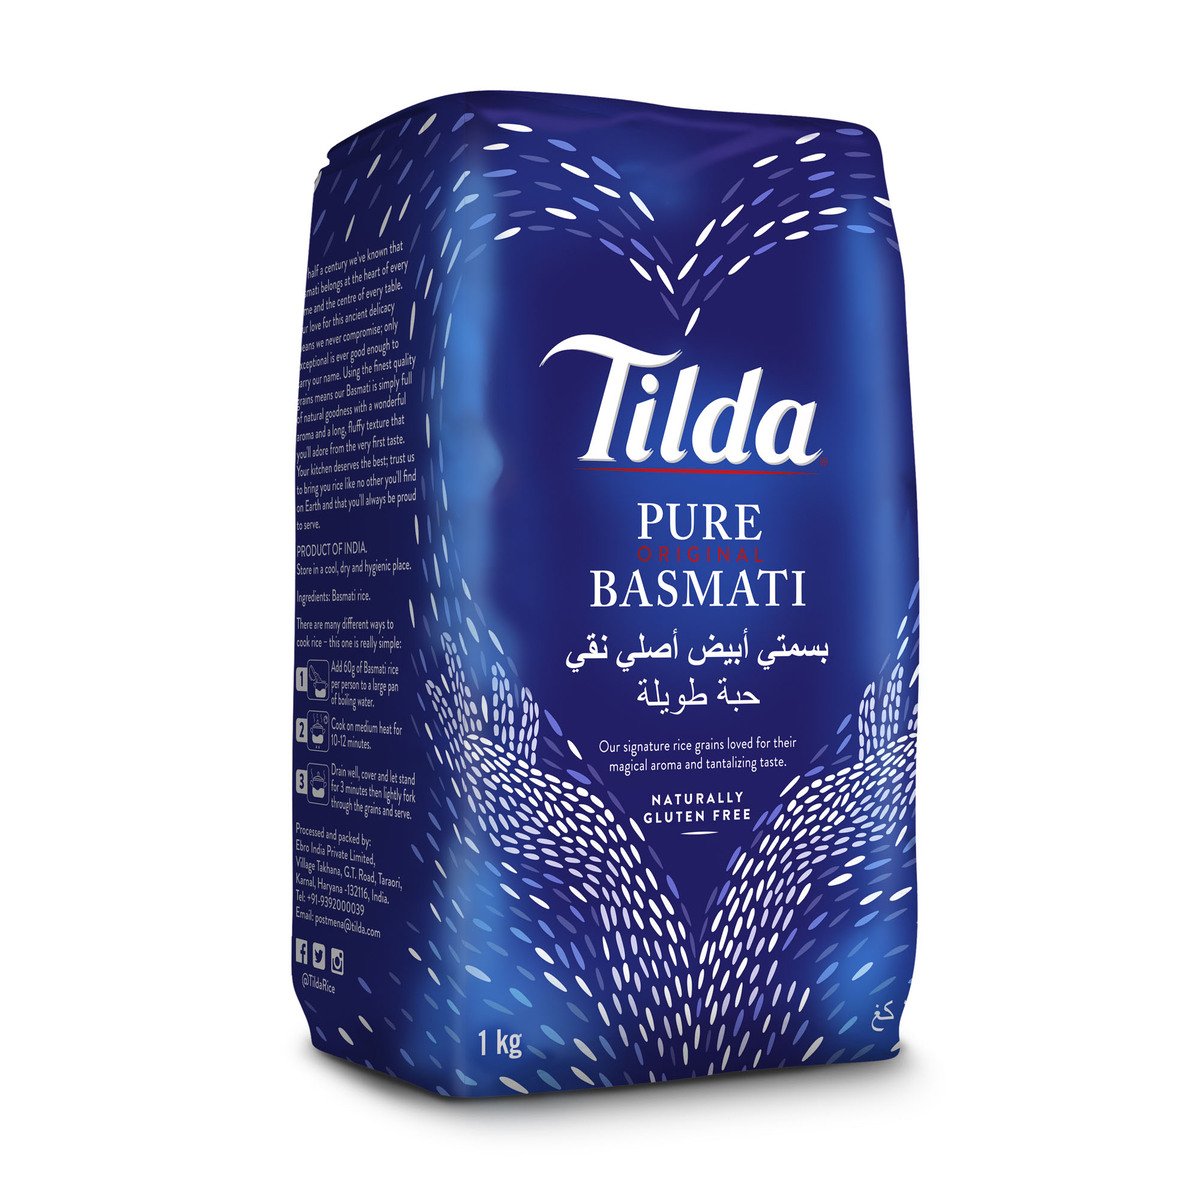 Tilda Pure Original Basmati Rice 1kg